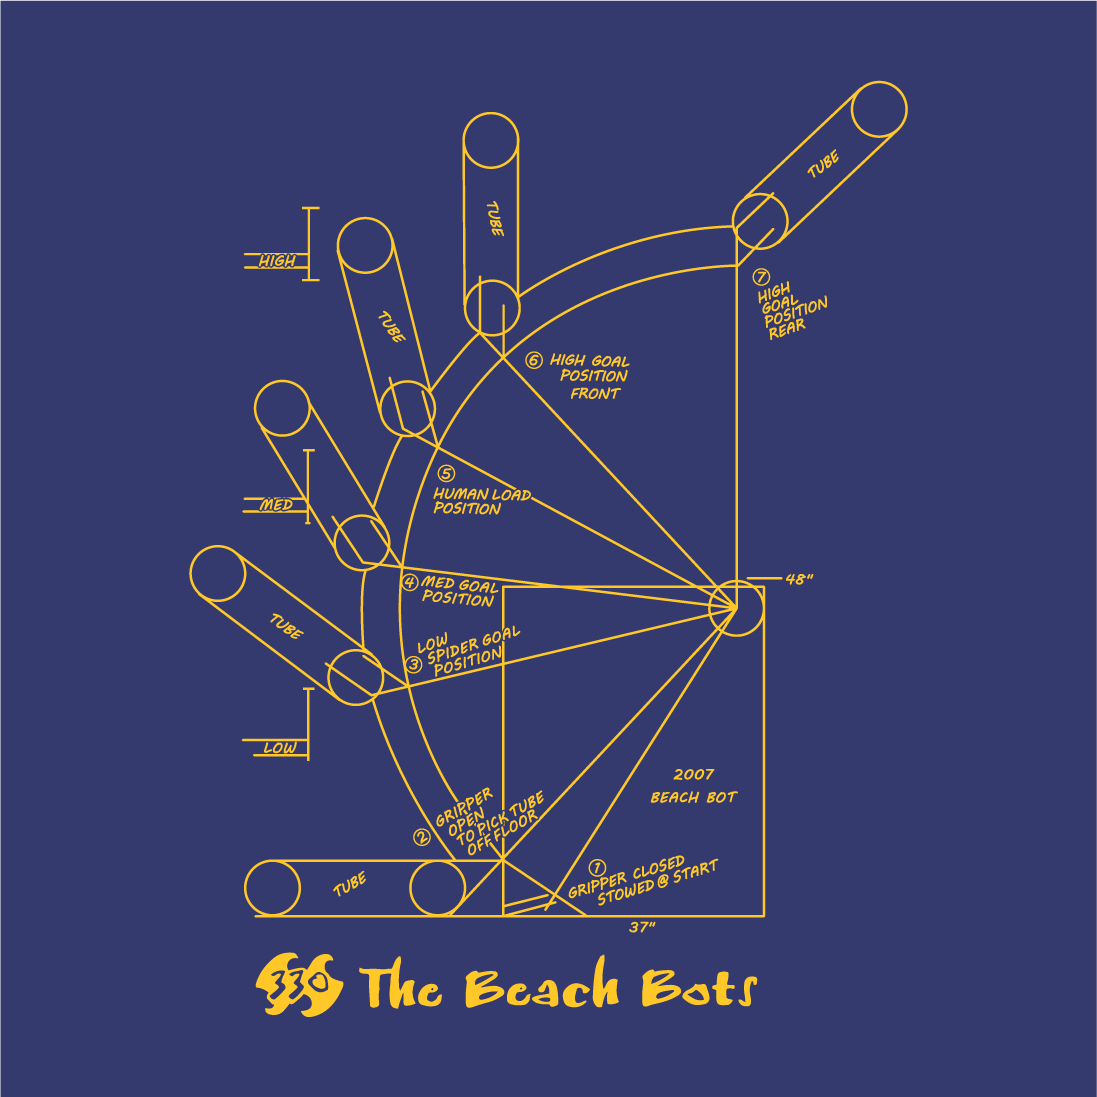 The Beach Bots - Arm Geometry Tshirt shirt design - zoomed